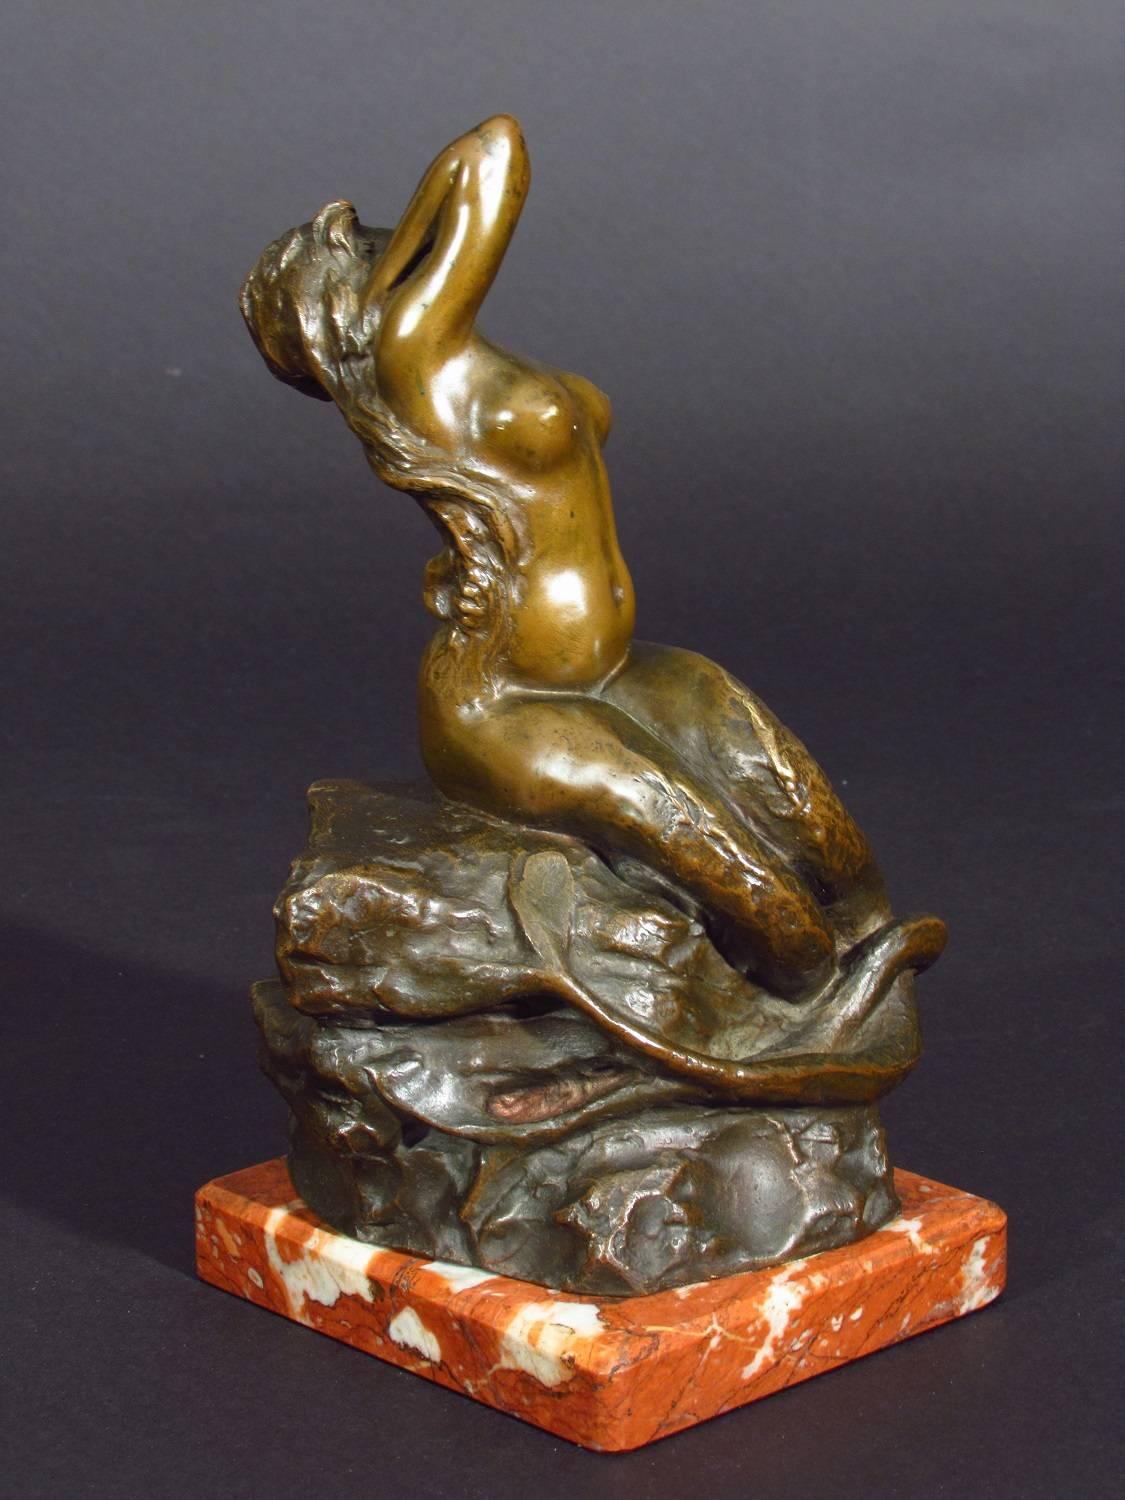 The Siren - Brown Figurative Sculpture by Vincenzo Bentivenga